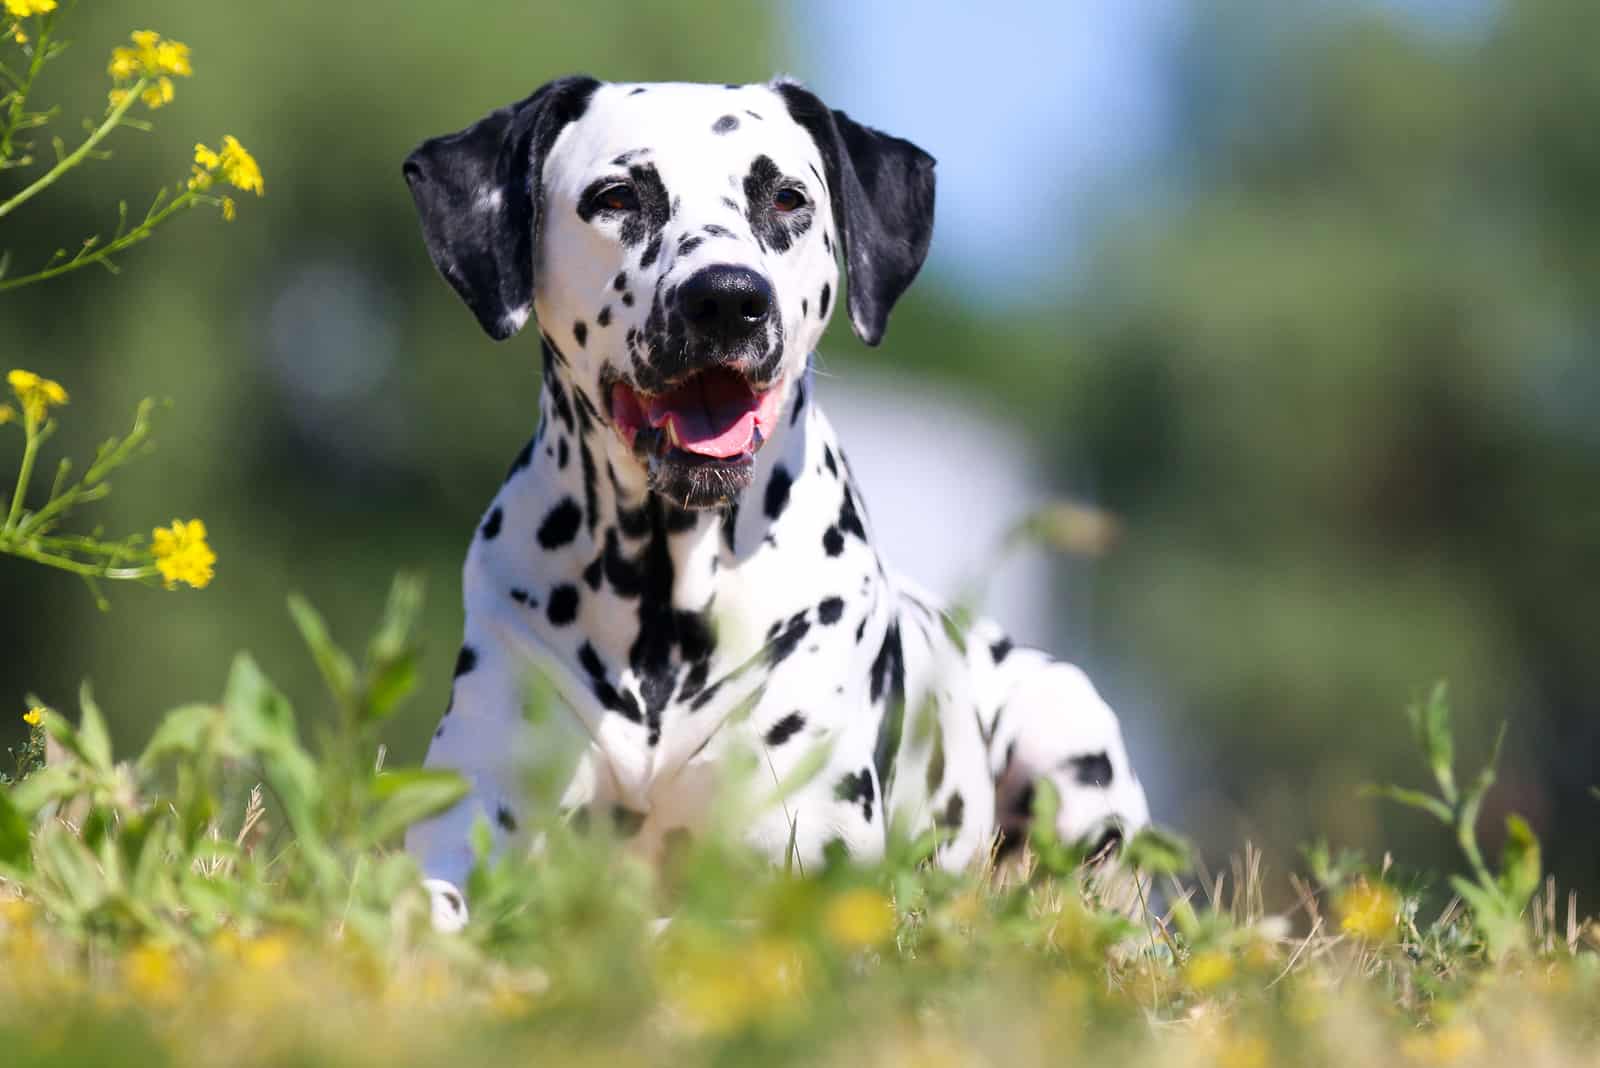 cute dalmatian dog with black spots